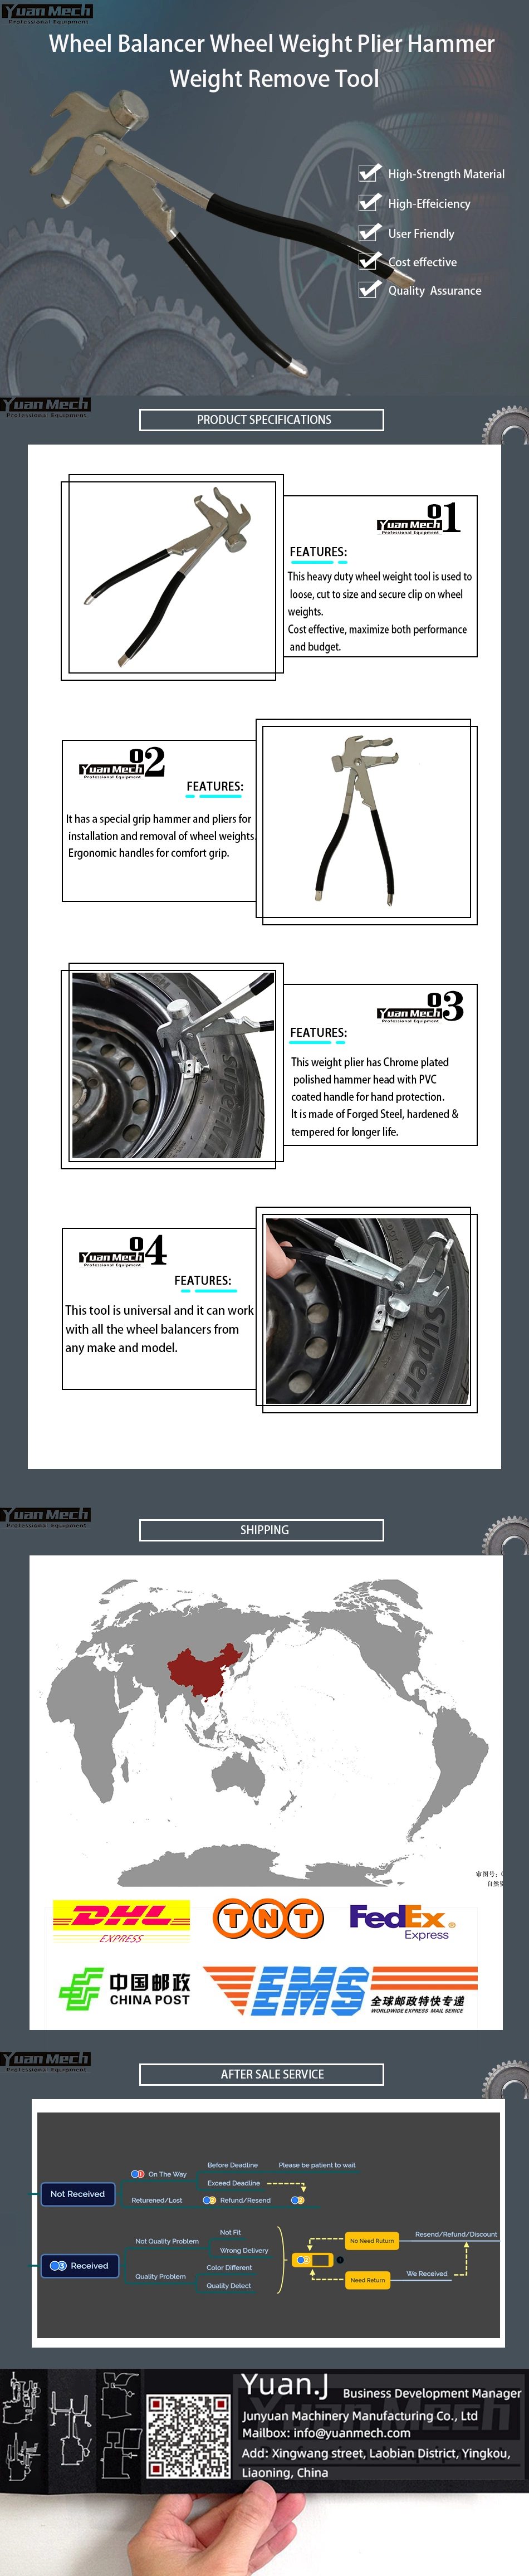 Wheel Balancer Accessories Balance Car Wheel Weight Plier Hammer